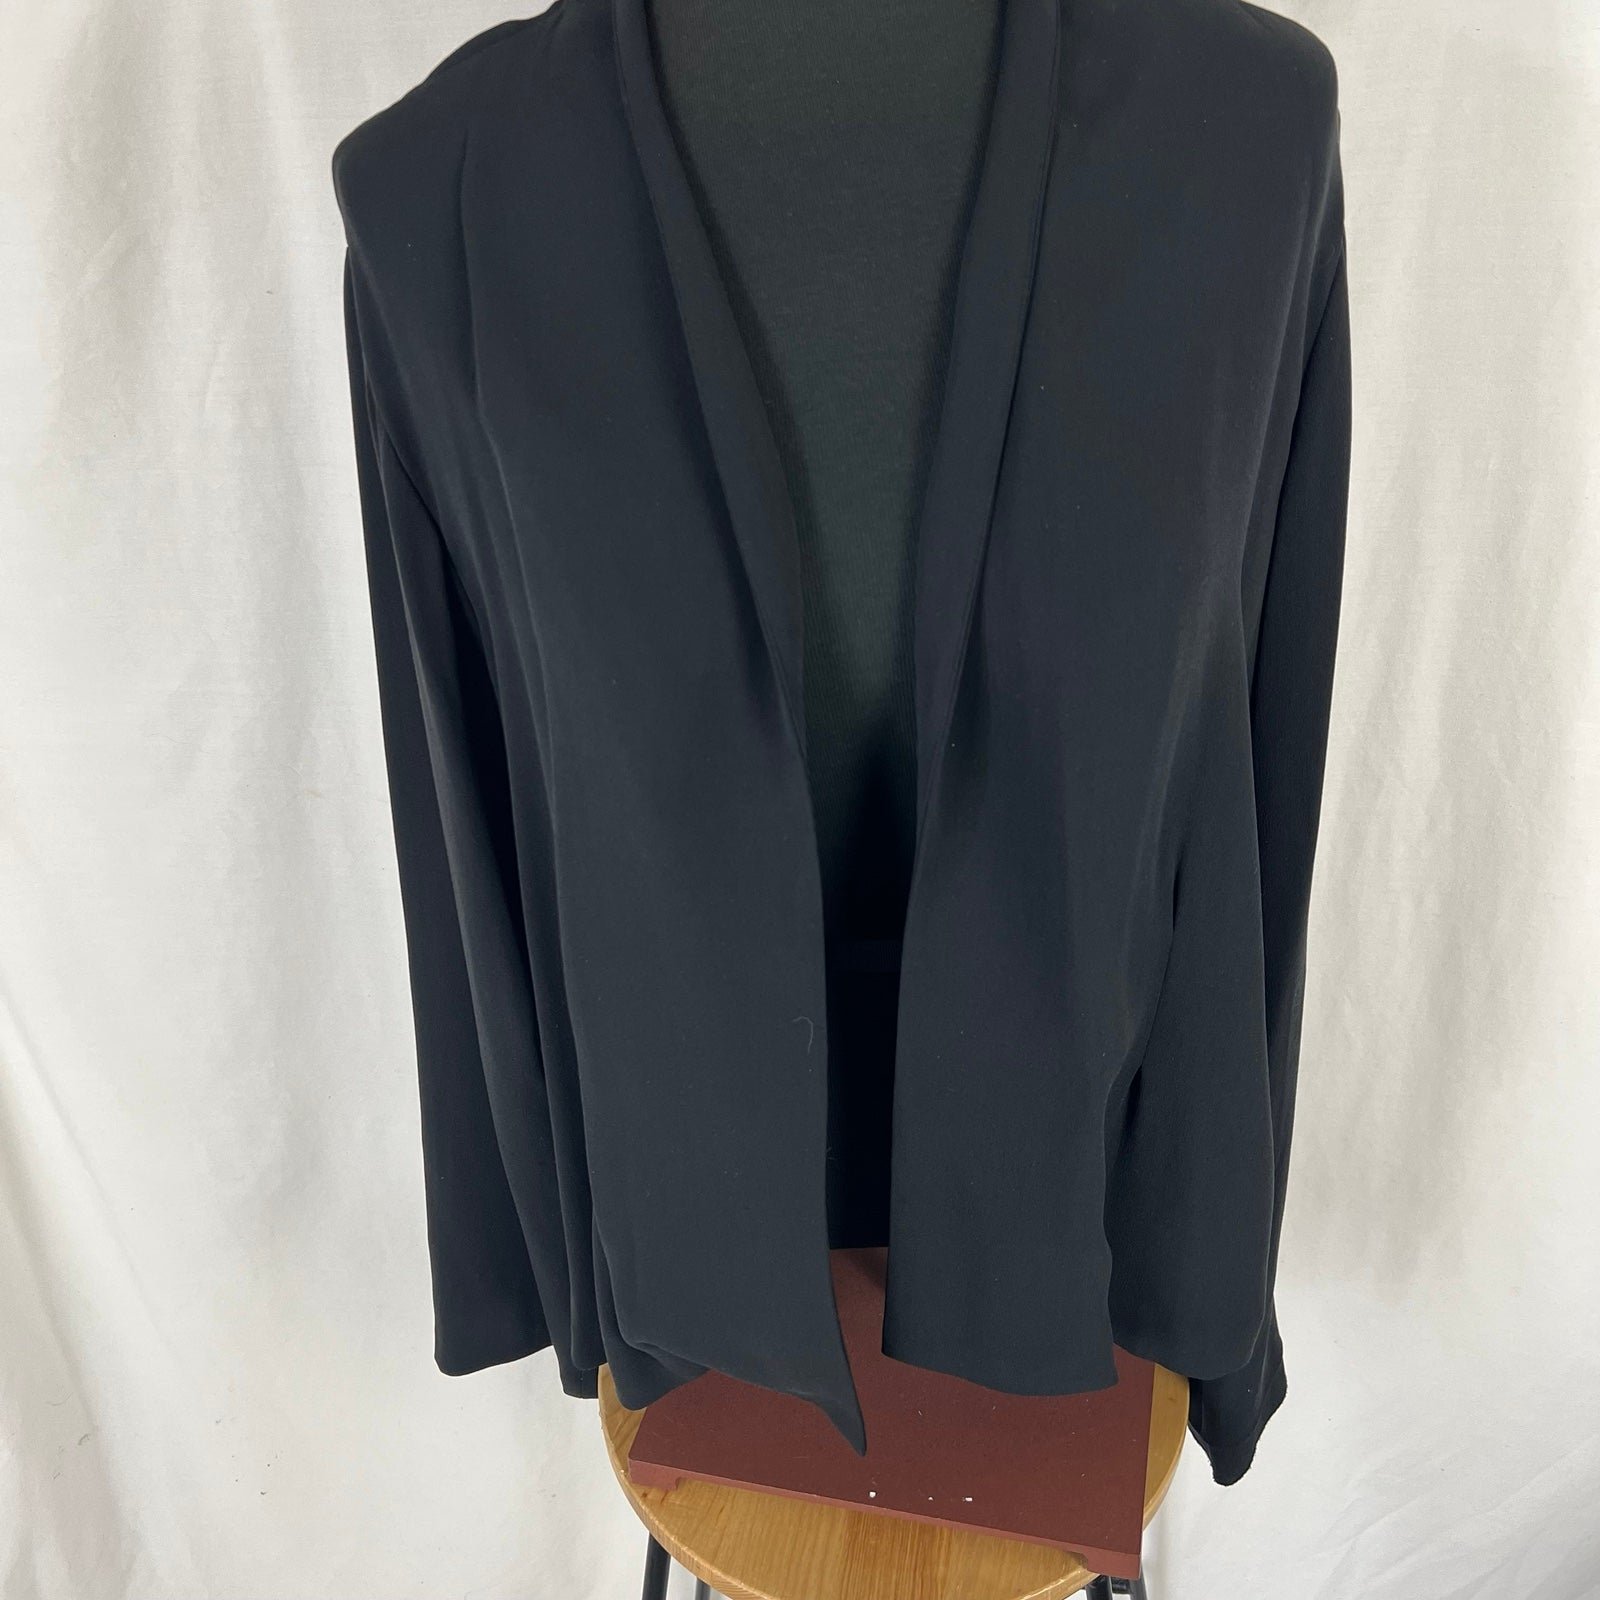 Authentic Eileen Fisher open front silk & spandex jacket sz Large JmPw3tWdk online store